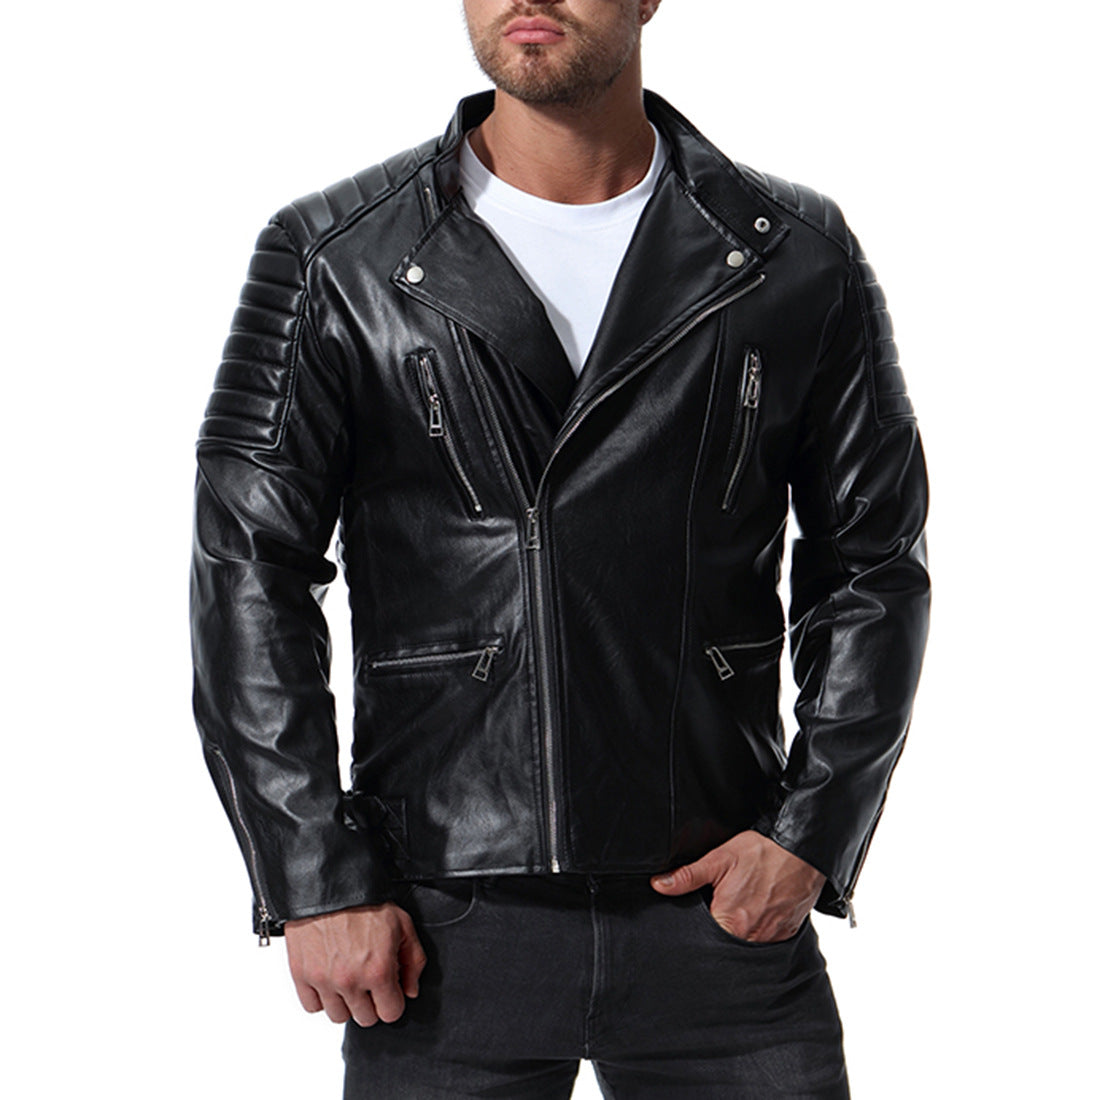 La chaqueta de motocicleta de cuero de Iron Jia, impermeable, impermeable, impermeable, urbano, moto, motocrós, ropa para hombre, chaqueta de montar